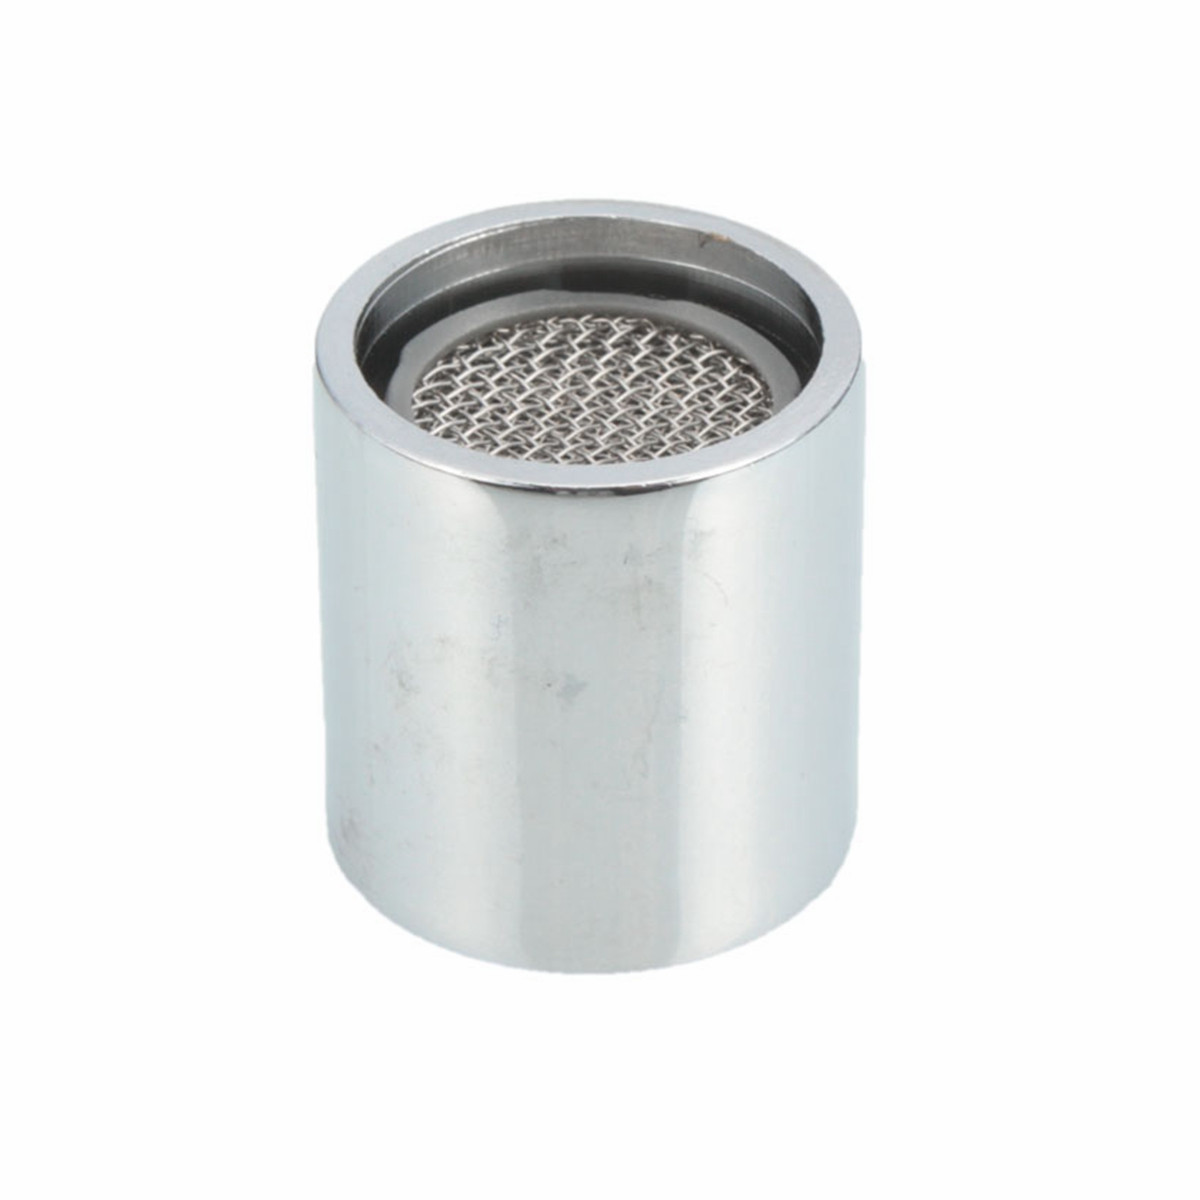 154mm-Faucet-Bubbler-Sprayer-Water-Saving-Filter-Female-Thread-1040225